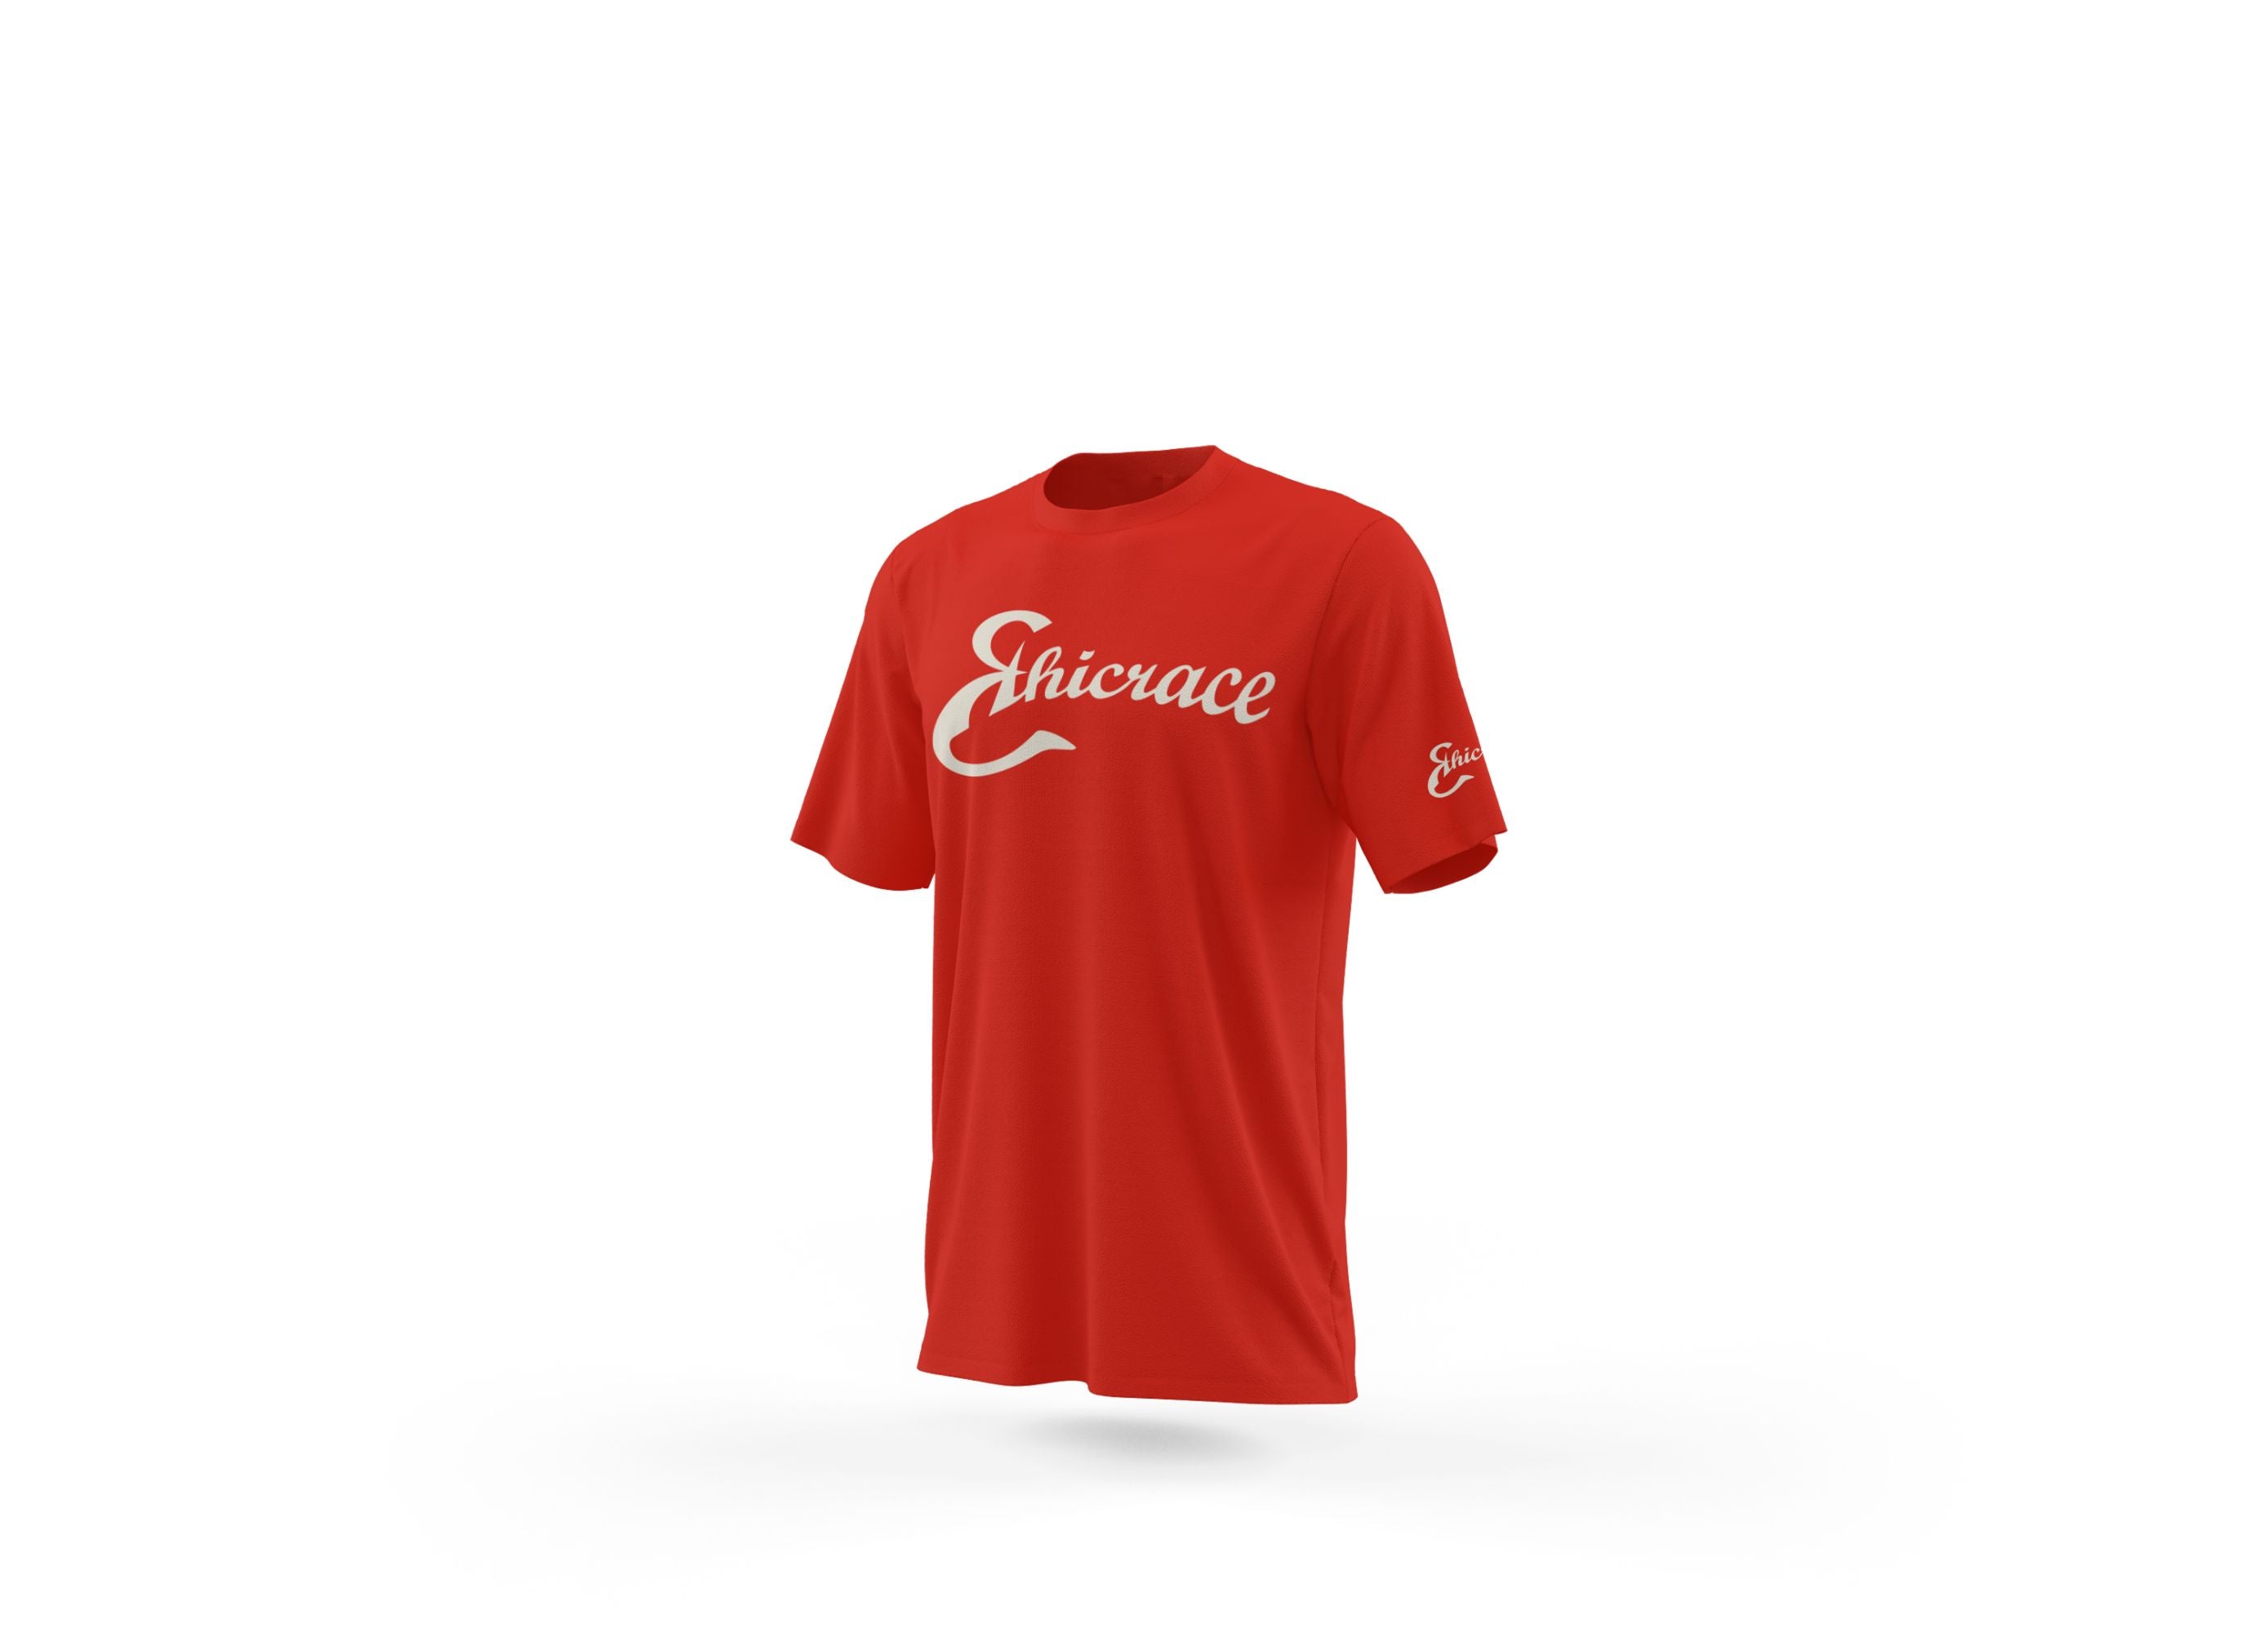 Ethicrace Cursive Logo Shirt for Men (Red)